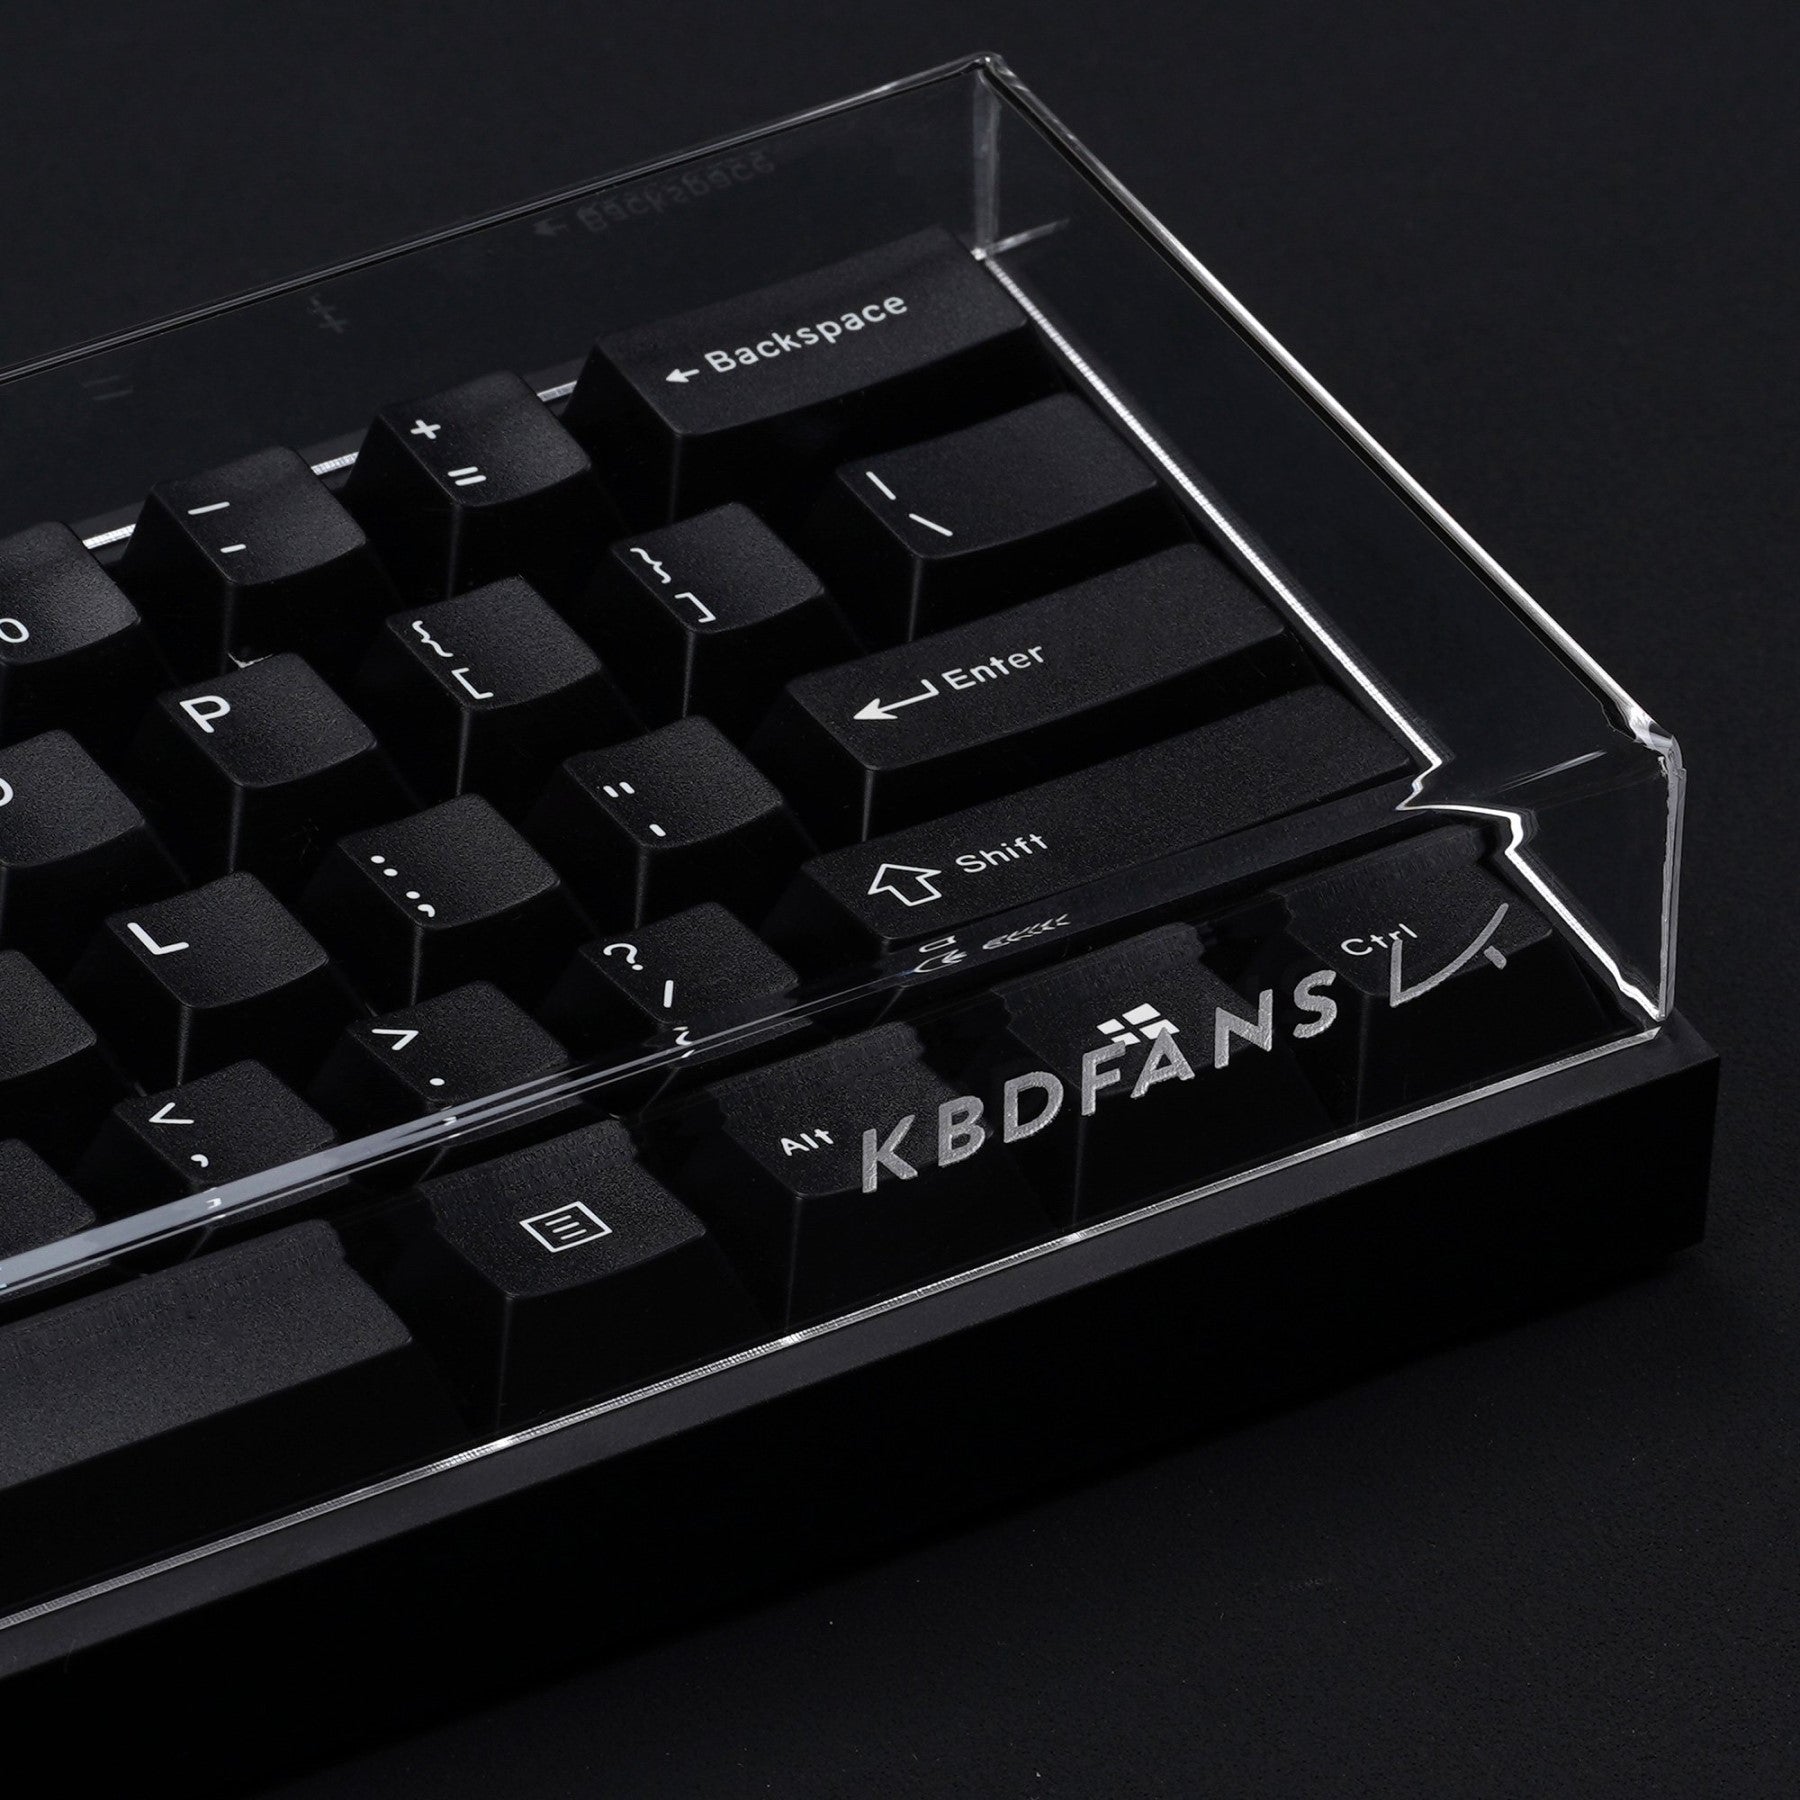 Anti-Dust Keyboard Cover by KBDfans